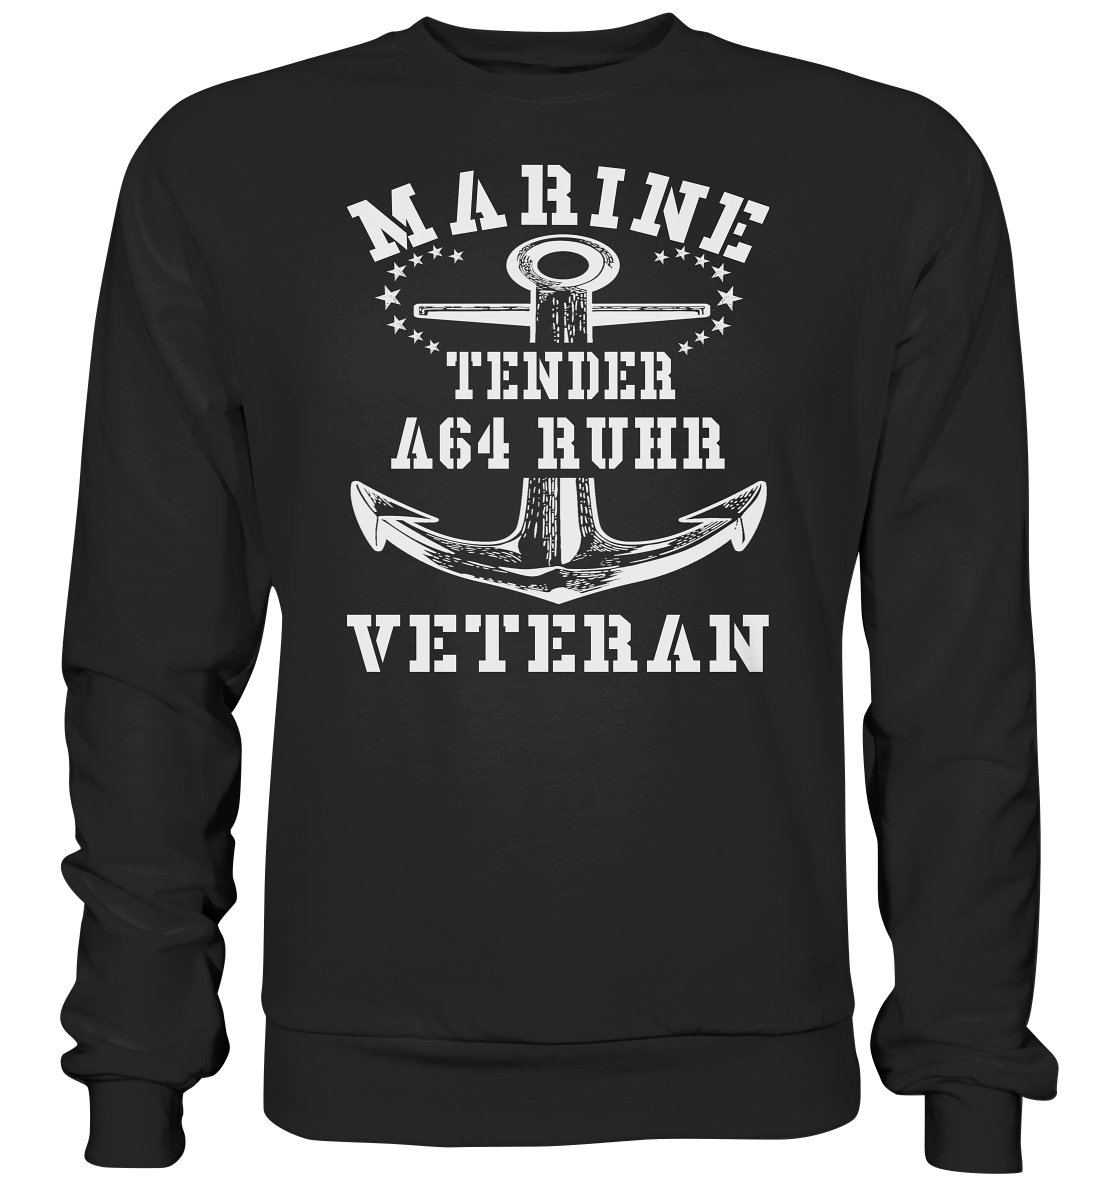 Tender A64 RUHR Marine Veteran - Premium Sweatshirt